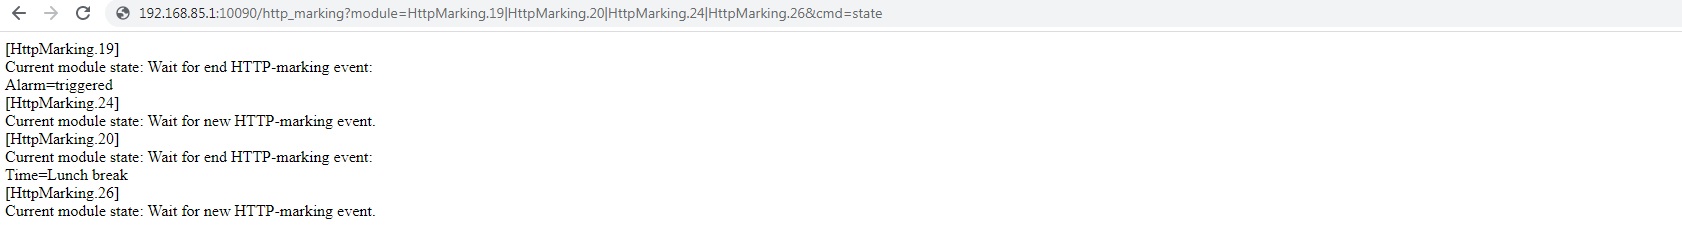 http_marking_state